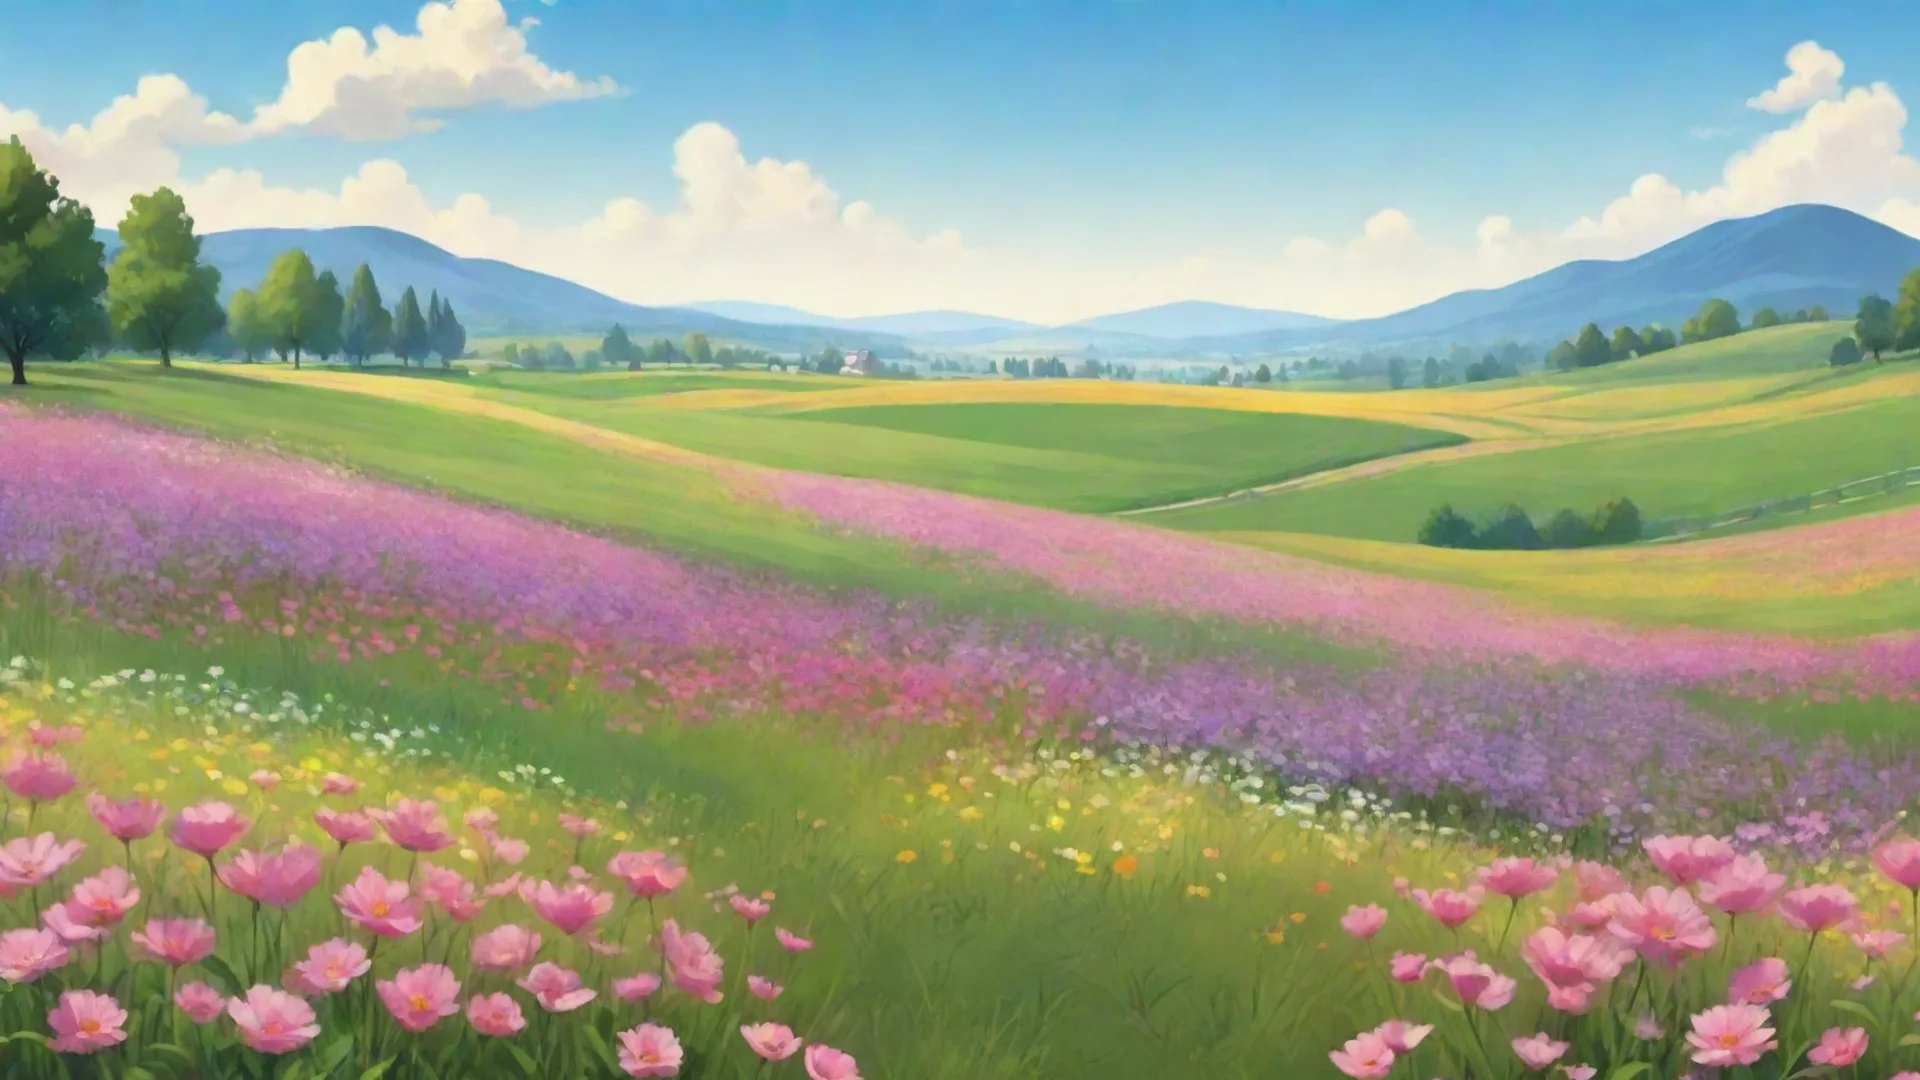 aitrending background sweeping landscape fields of flowers peaceful relaxing cartoon realisism hd good looking fantastic 1 wide